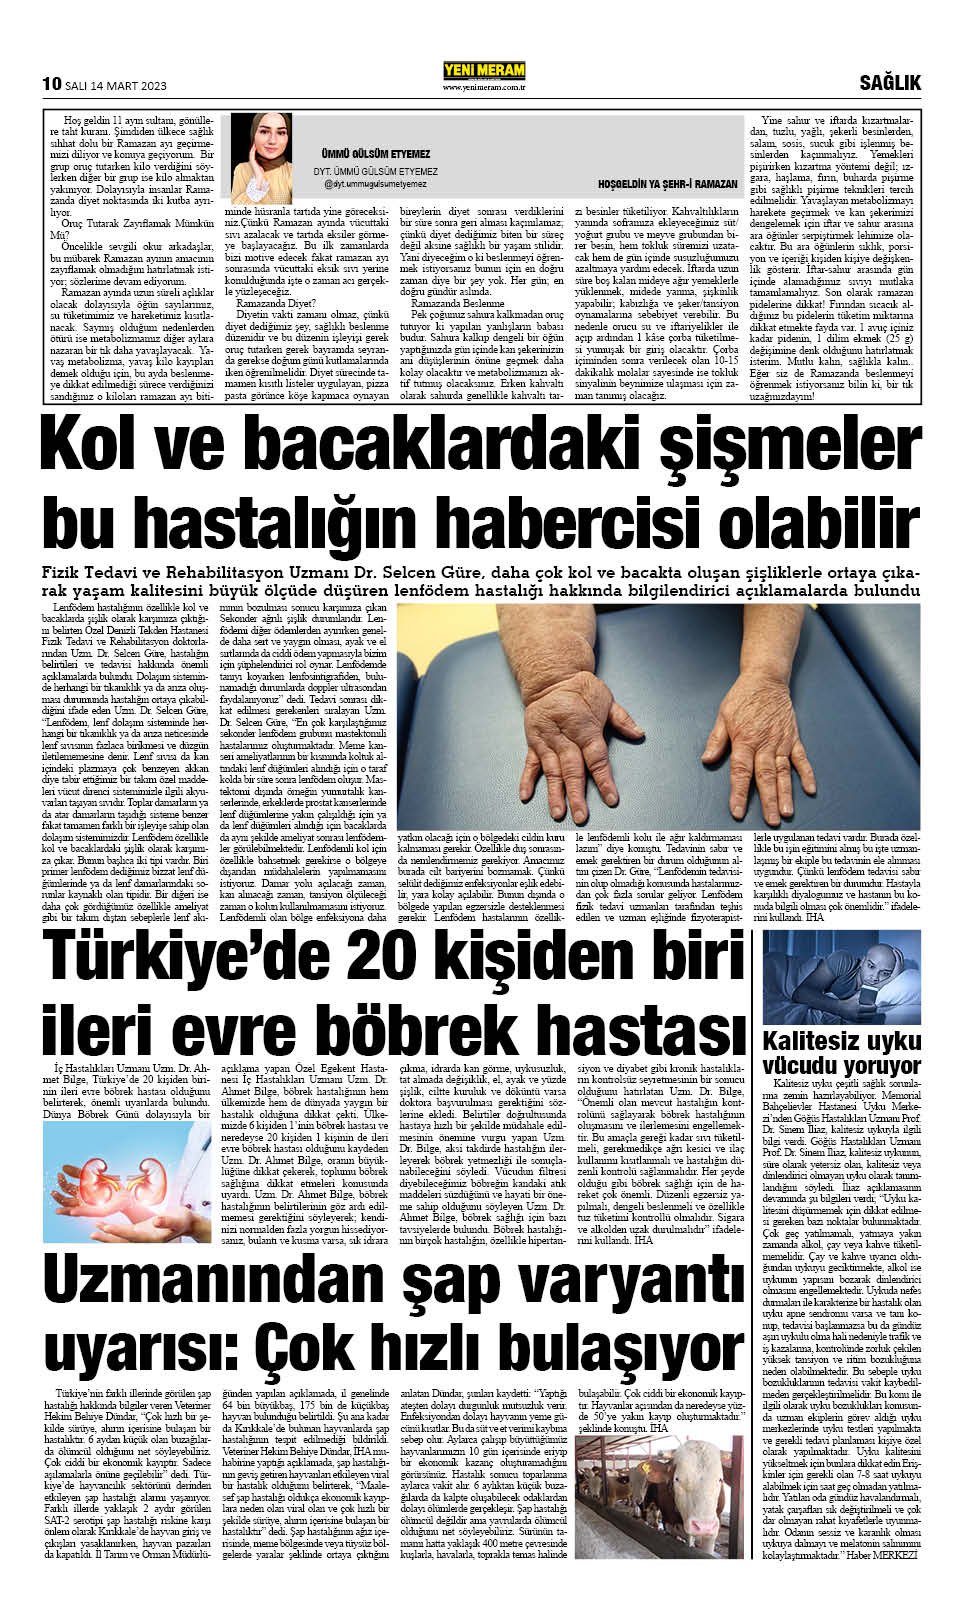 14 Mart 2023 Yeni Meram Gazetesi
